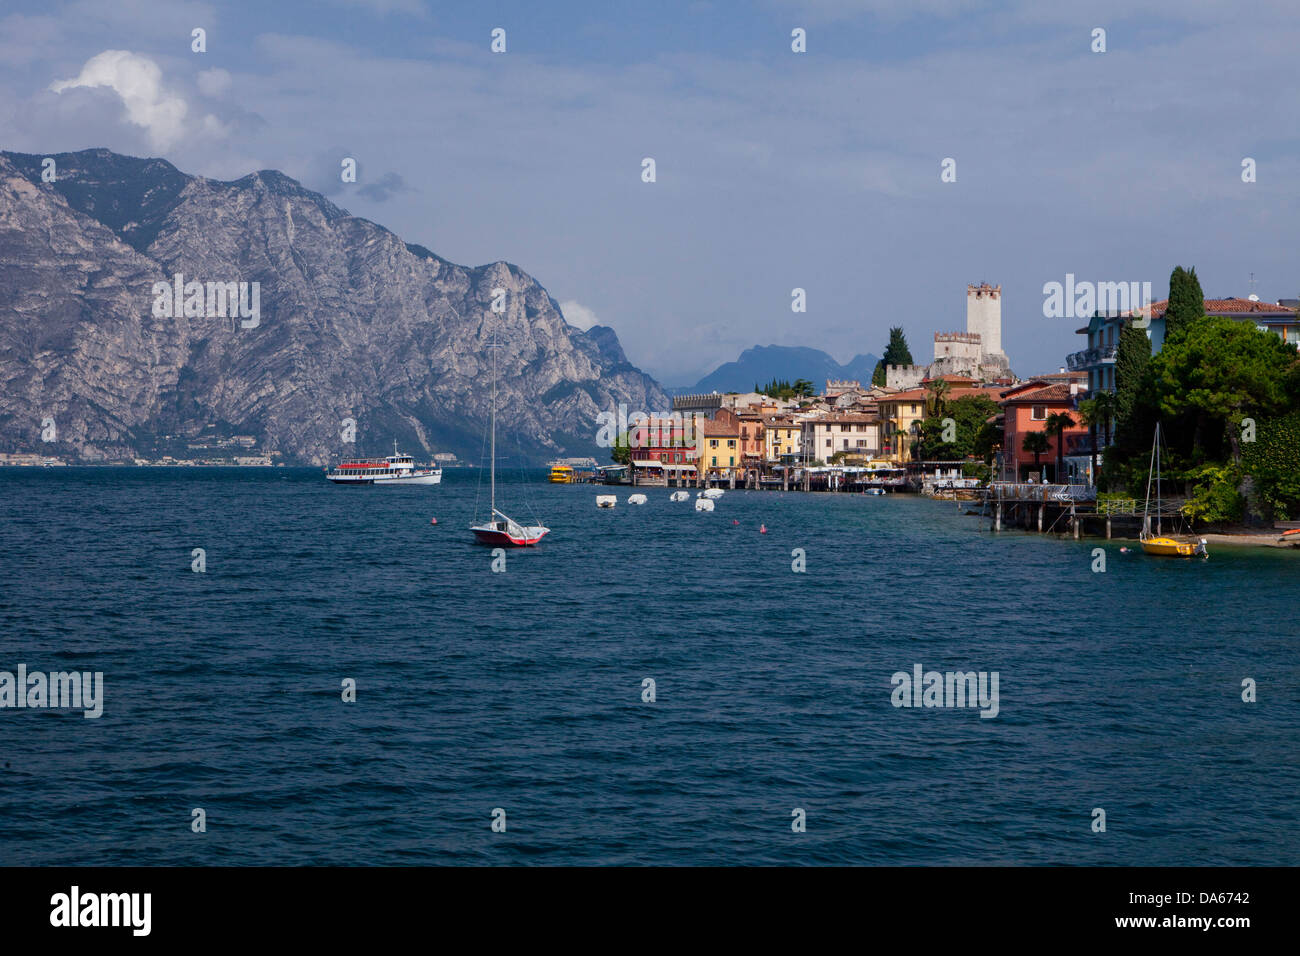 Malcesine, lake Garda, town, city, Italy, Europe, lake, lakes, mountains, boats Stock Photo